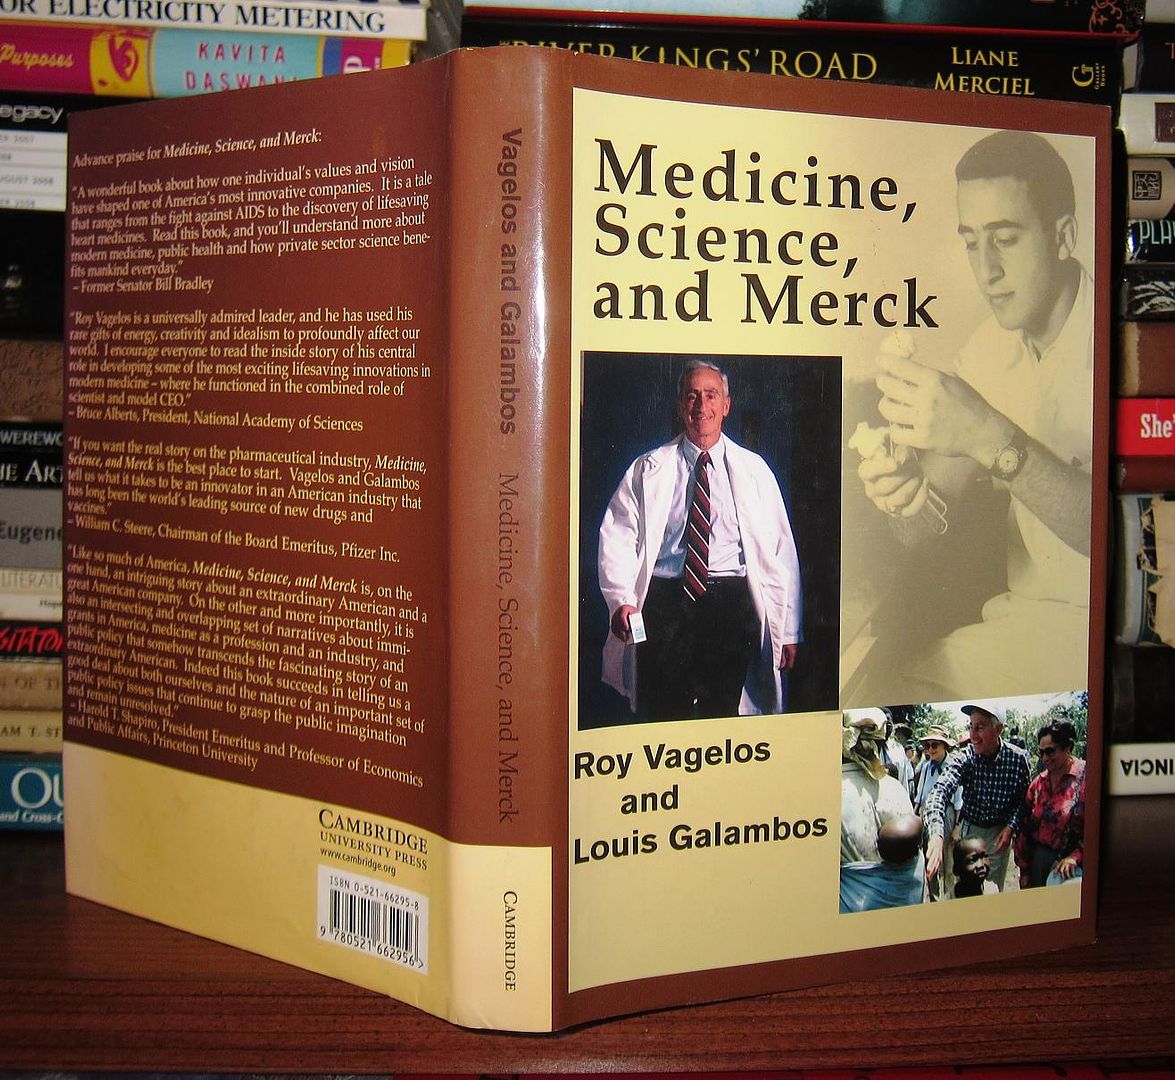 VAGELOS, P. ROY & LOUIS GALAMBOS - Medicine, Science and Merck